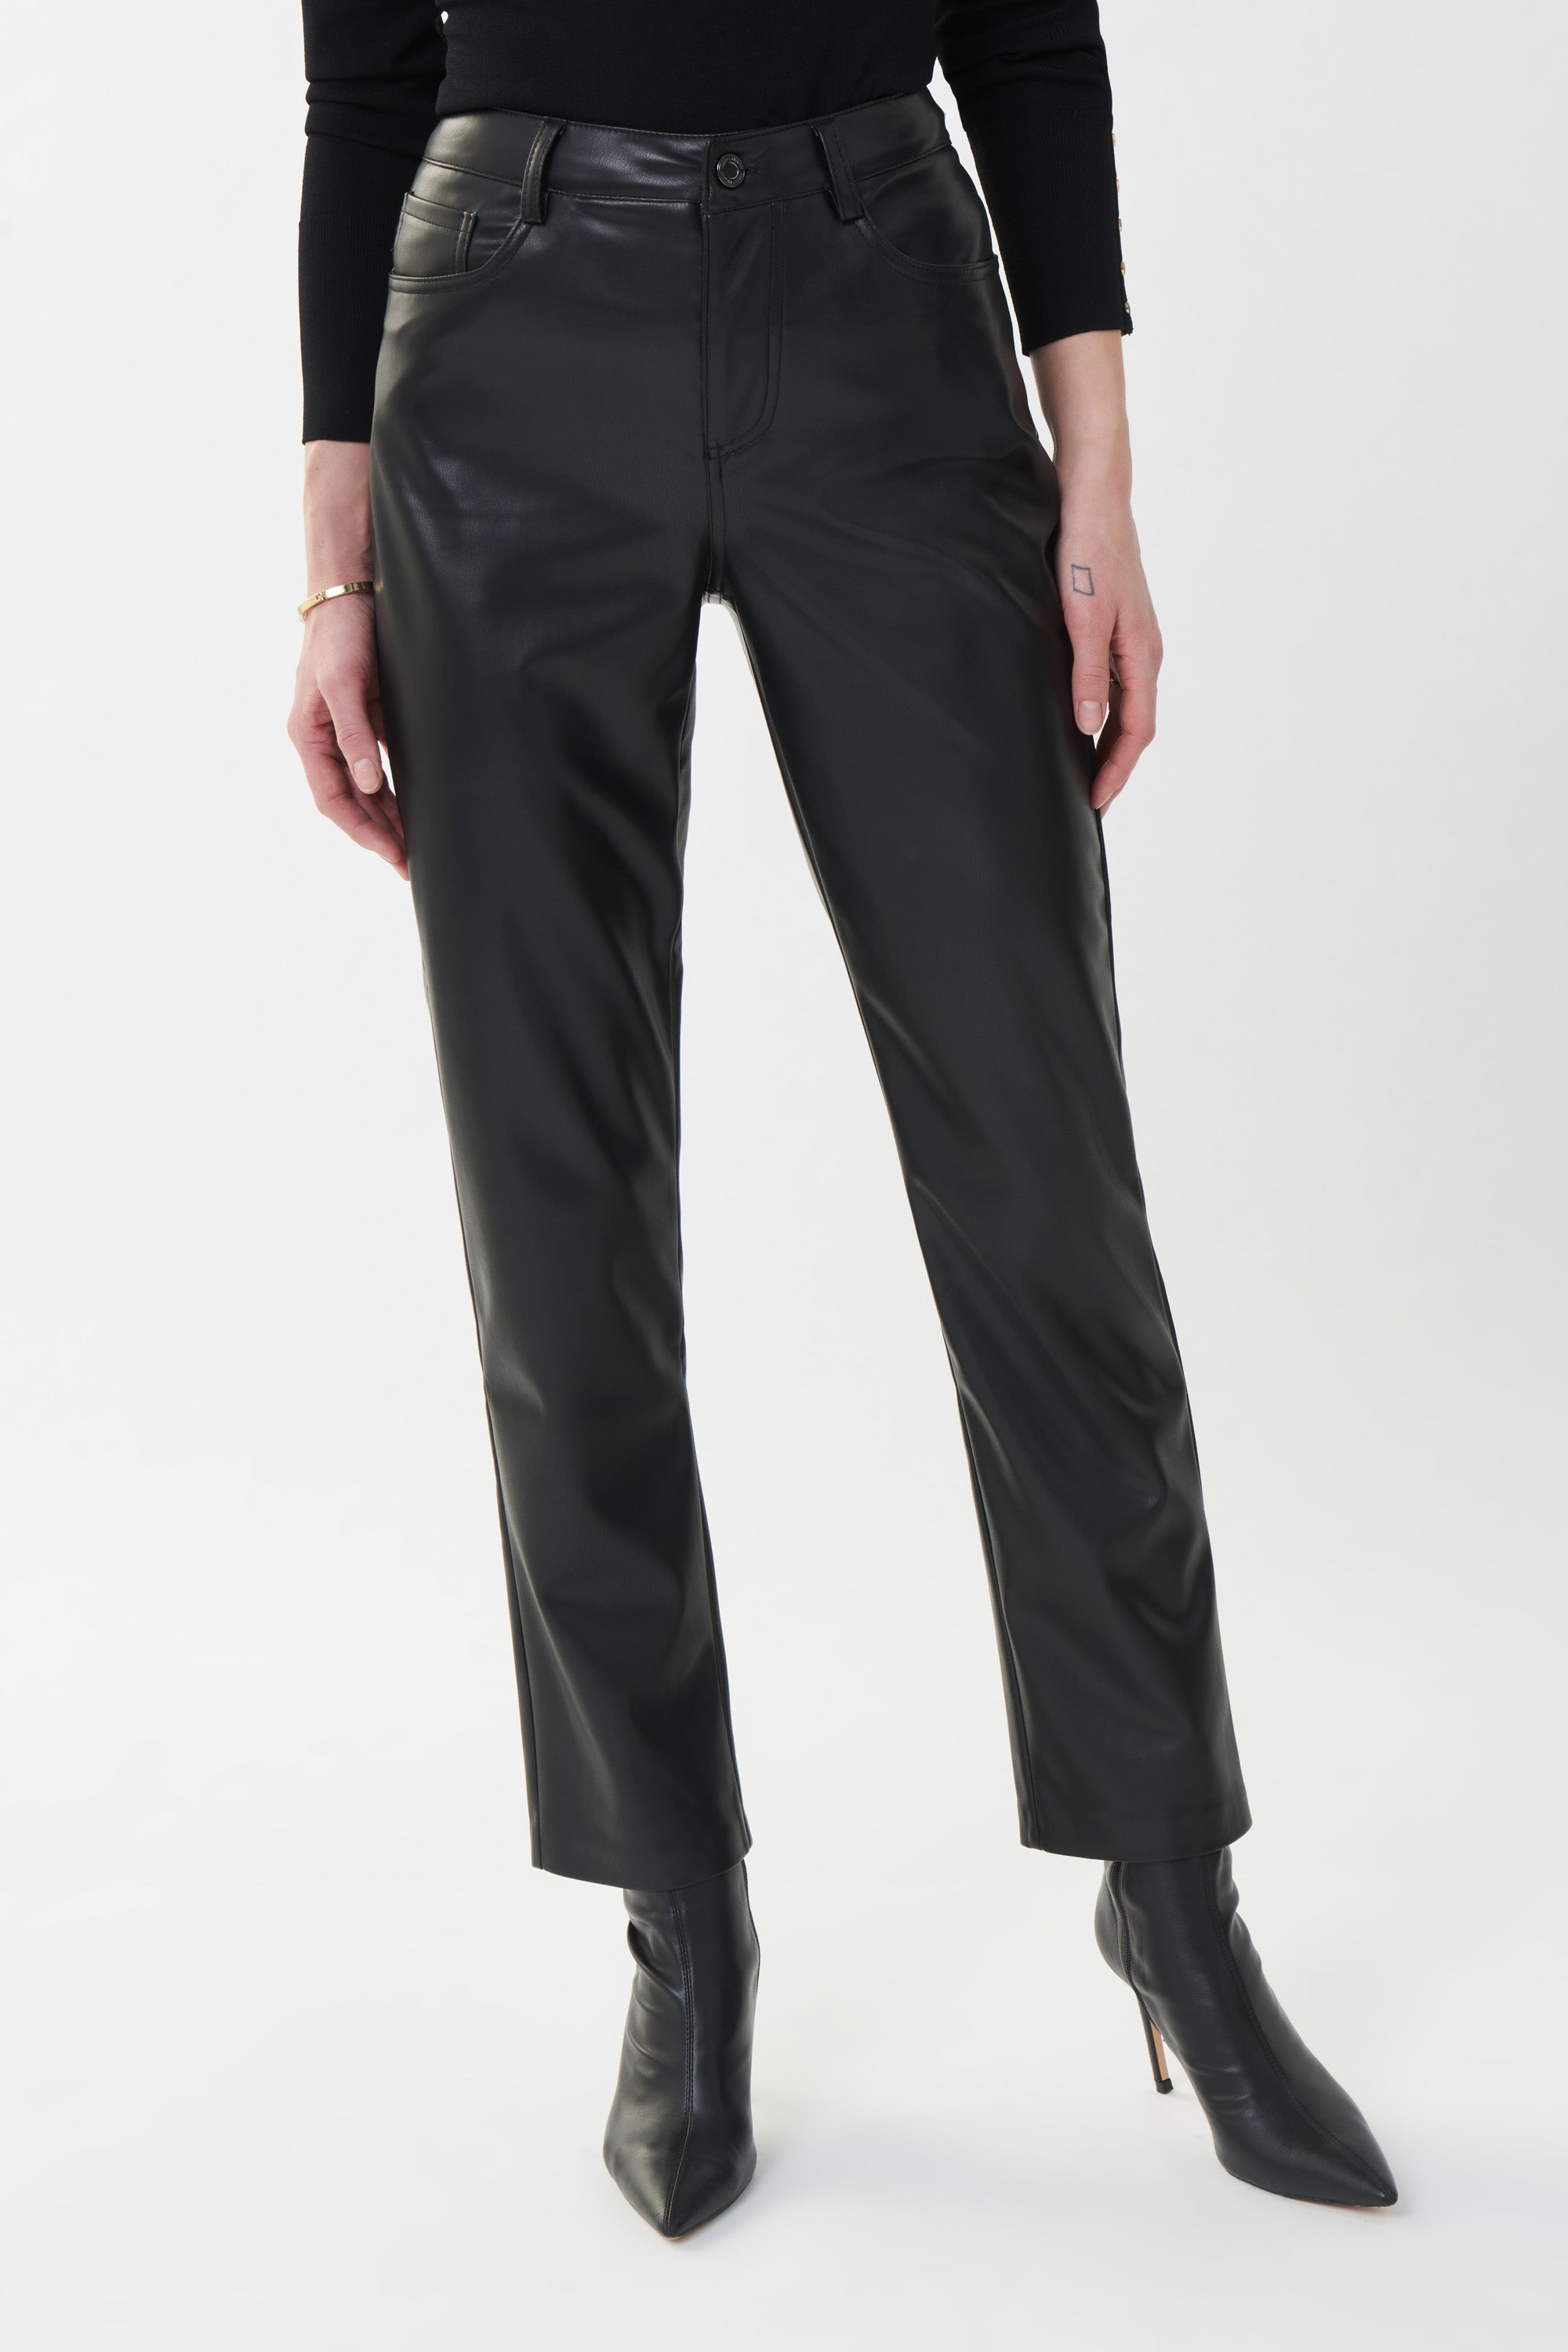 Joseph Ribkoff Style 223921 Black Faux Leather Pants